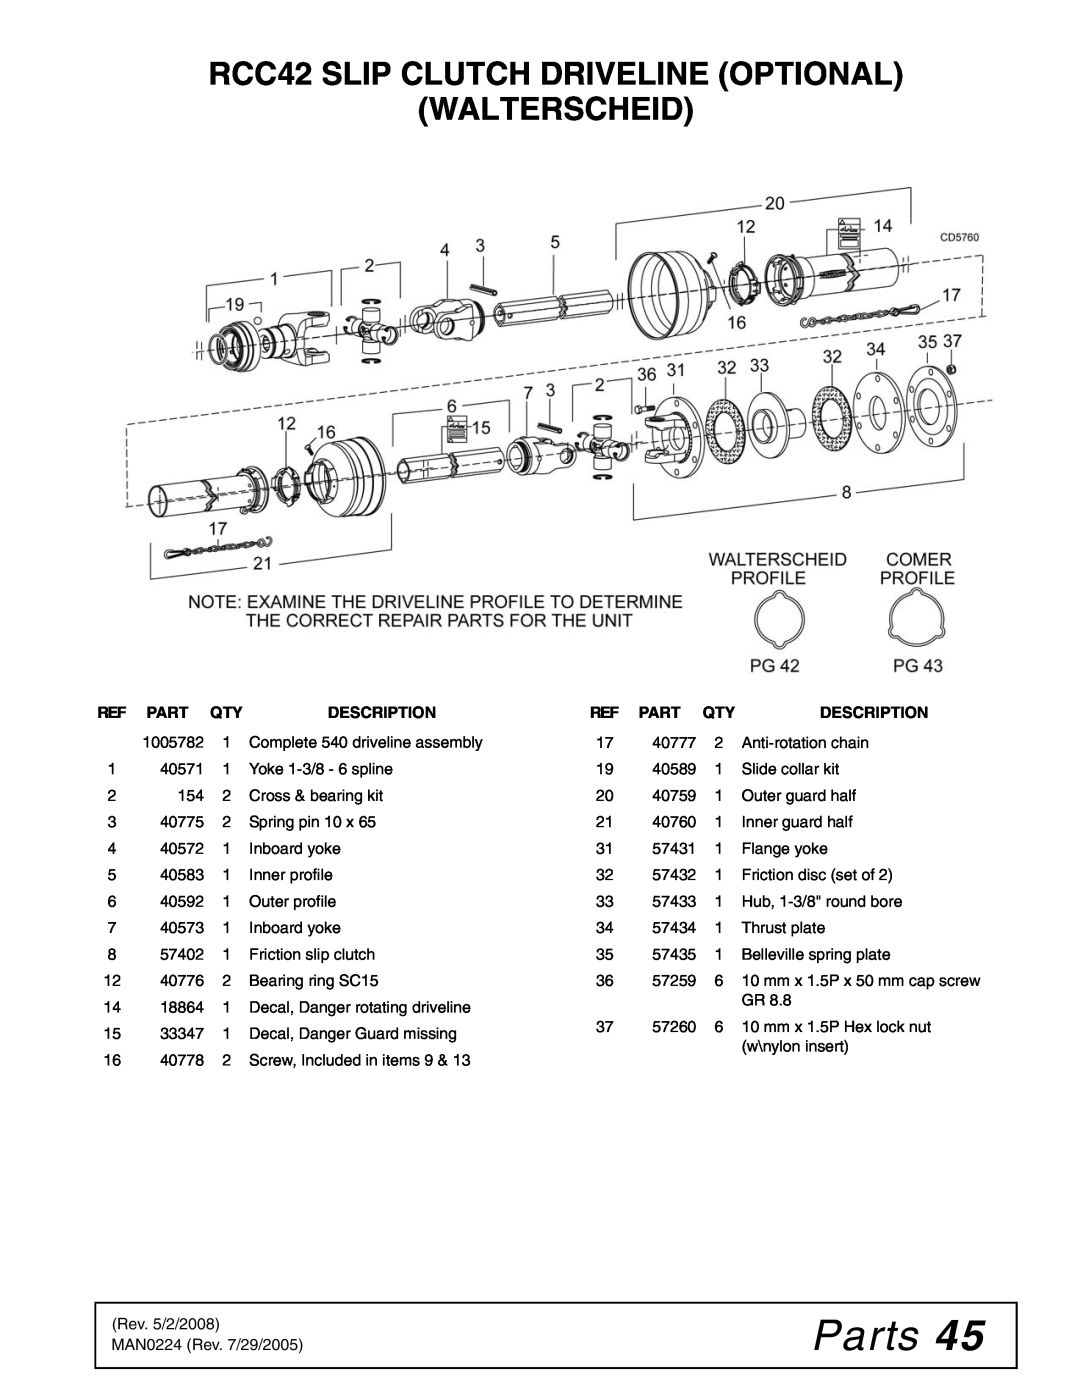 Woods Equipment manual RCC42 SLIP CLUTCH DRIVELINE OPTIONAL WALTERSCHEID, Parts, Description 